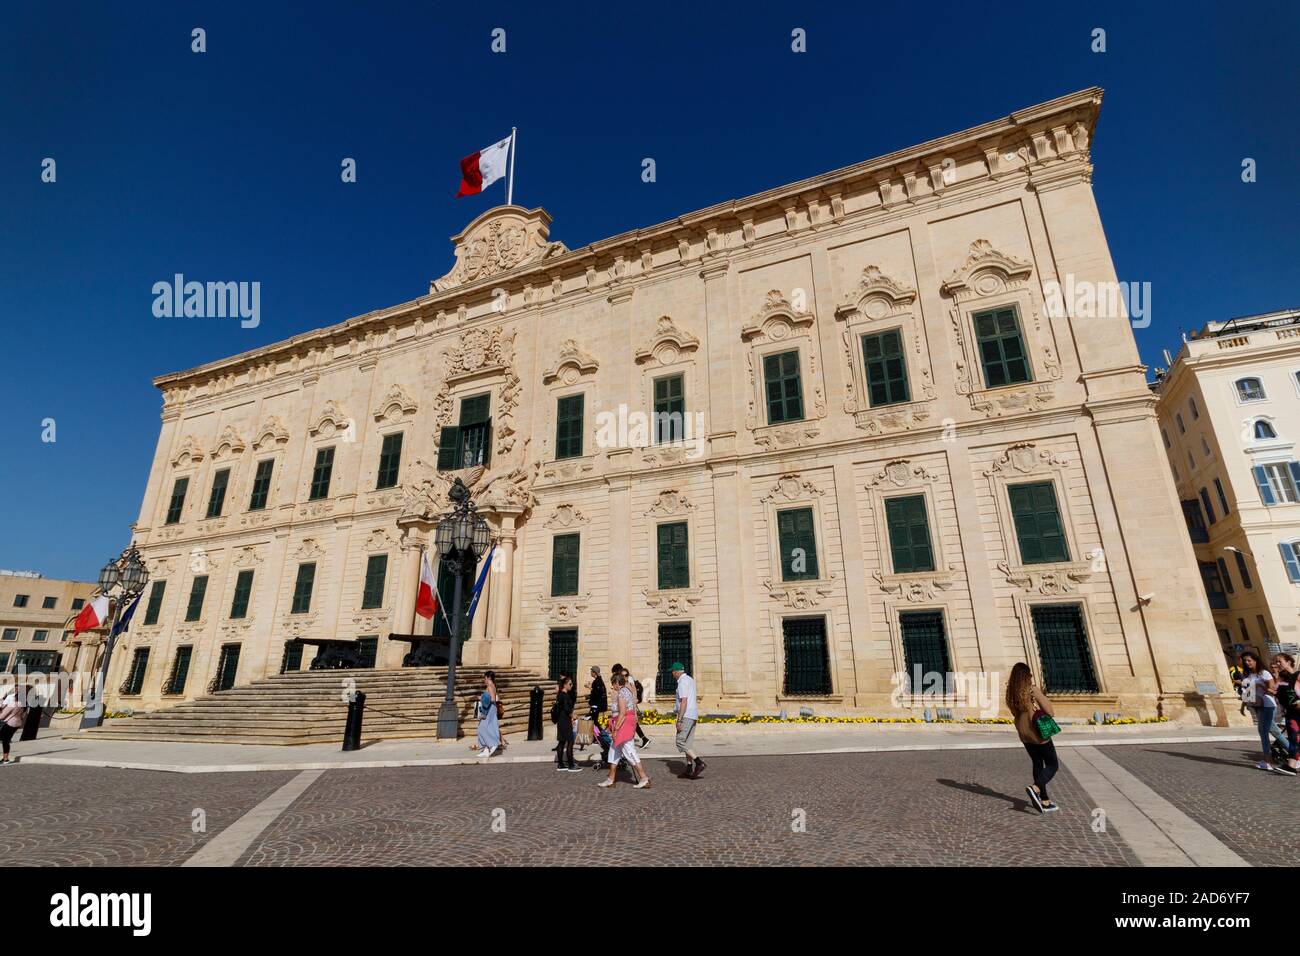 The 1740's Baroque style Auberge de Castille in Castille Place, Valletta, Malta. Offices of the Maltese Prime Minister. Stock Photo